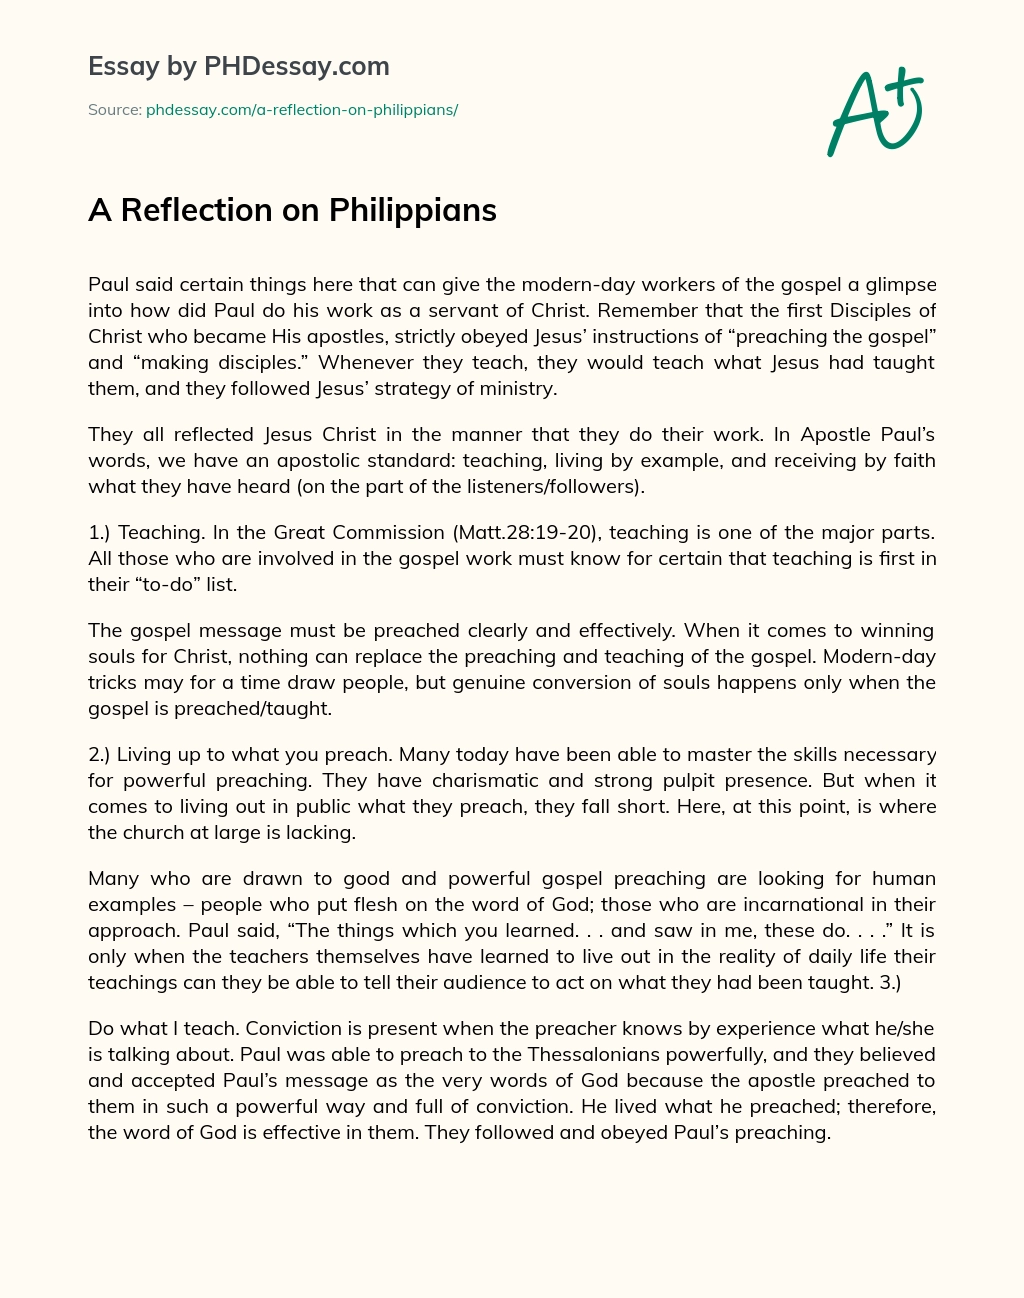 A Reflection on Philippians - PHDessay.com